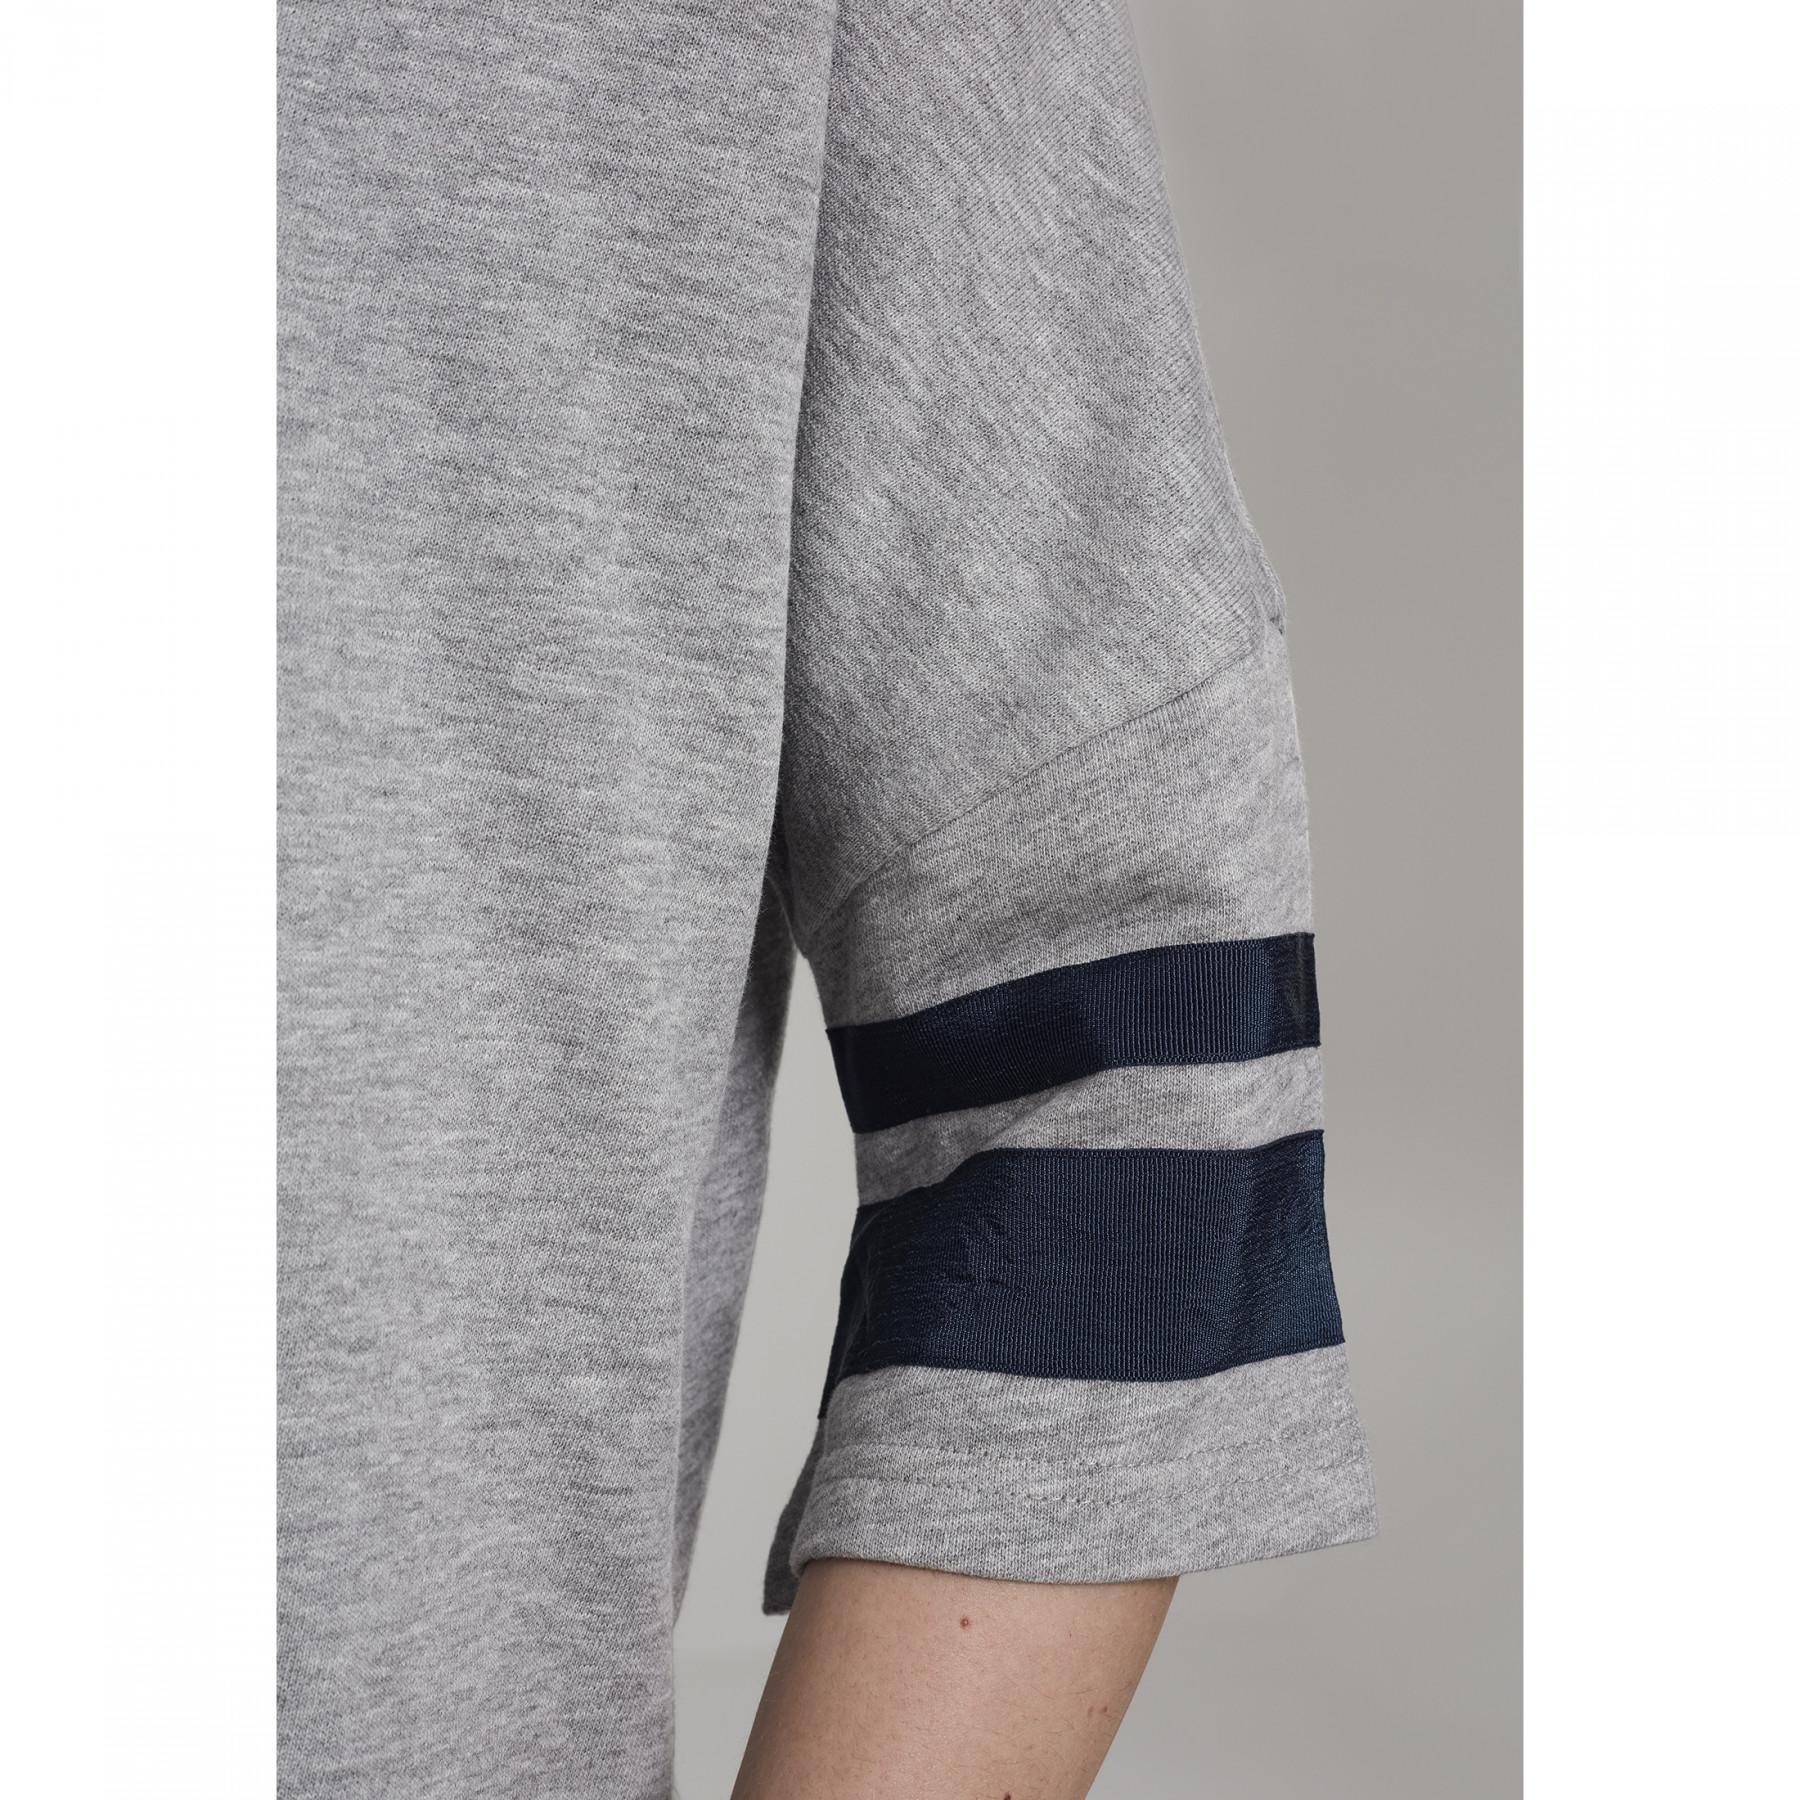 Women's hooded sweatshirt urban Classic taped leeve